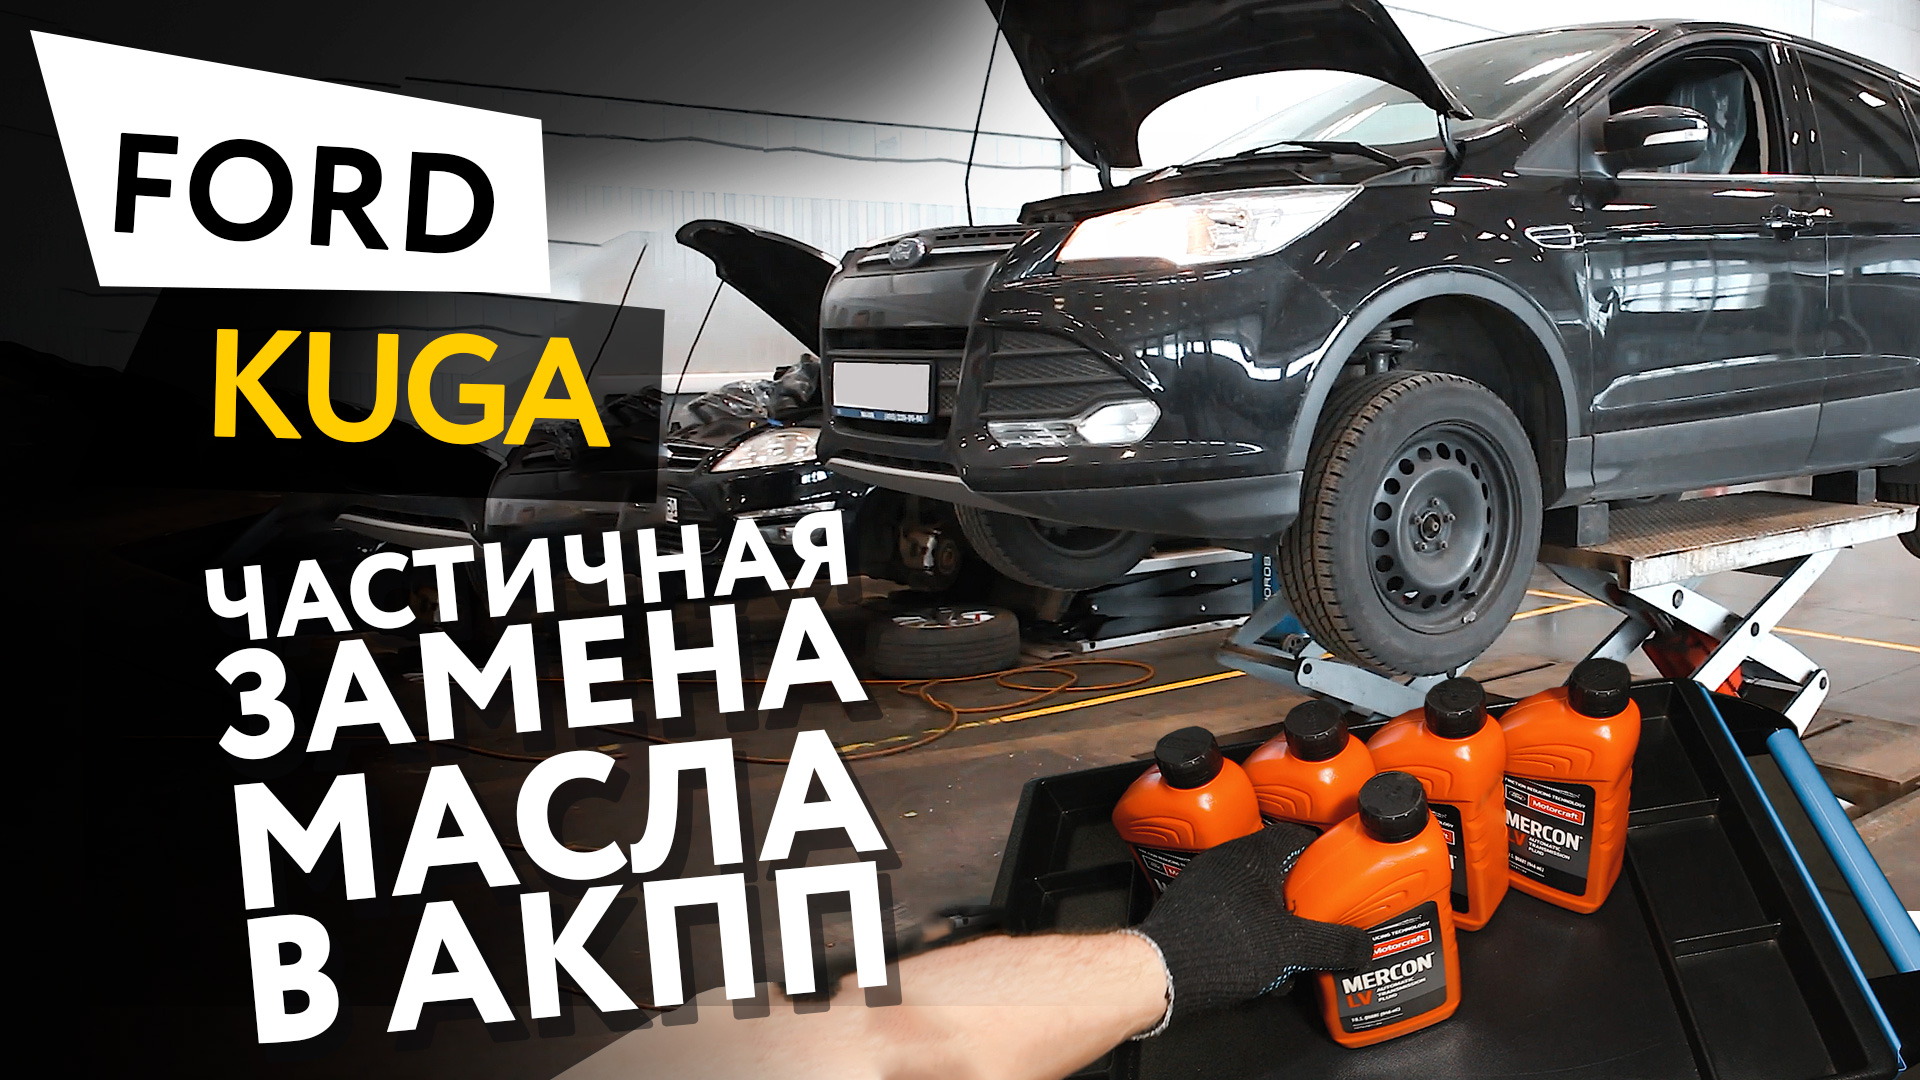 Частичная замена масла в АКПП автомобиля Ford Kuga 2,5